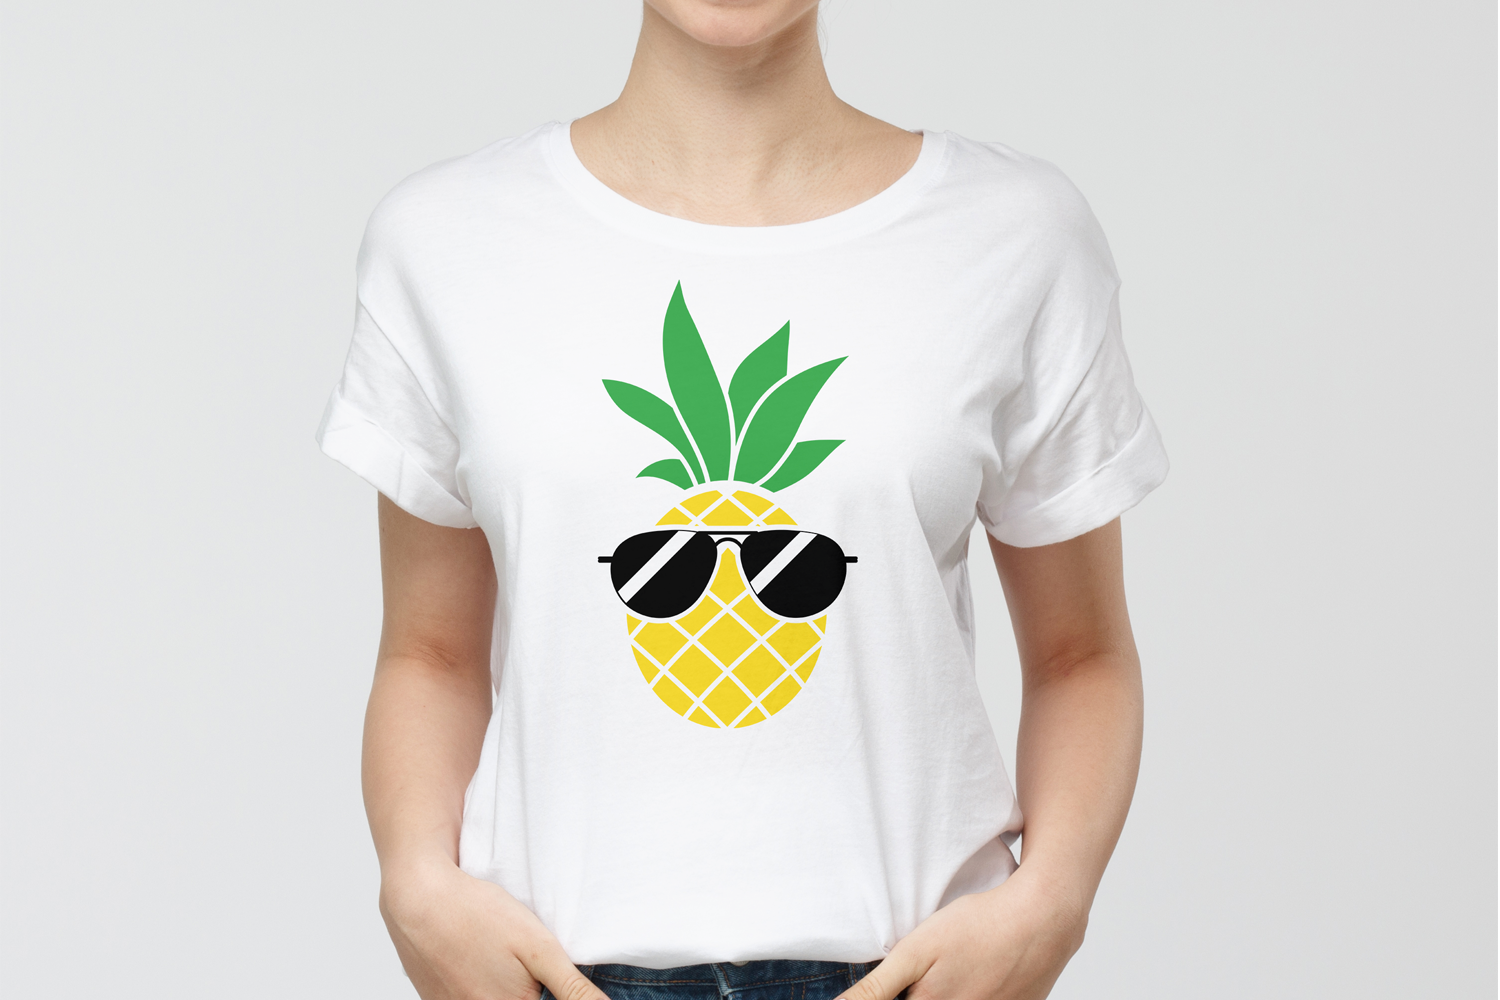 Download Pineapple SVG Cut Files Pack | Mandala Pineapple SVG By ...